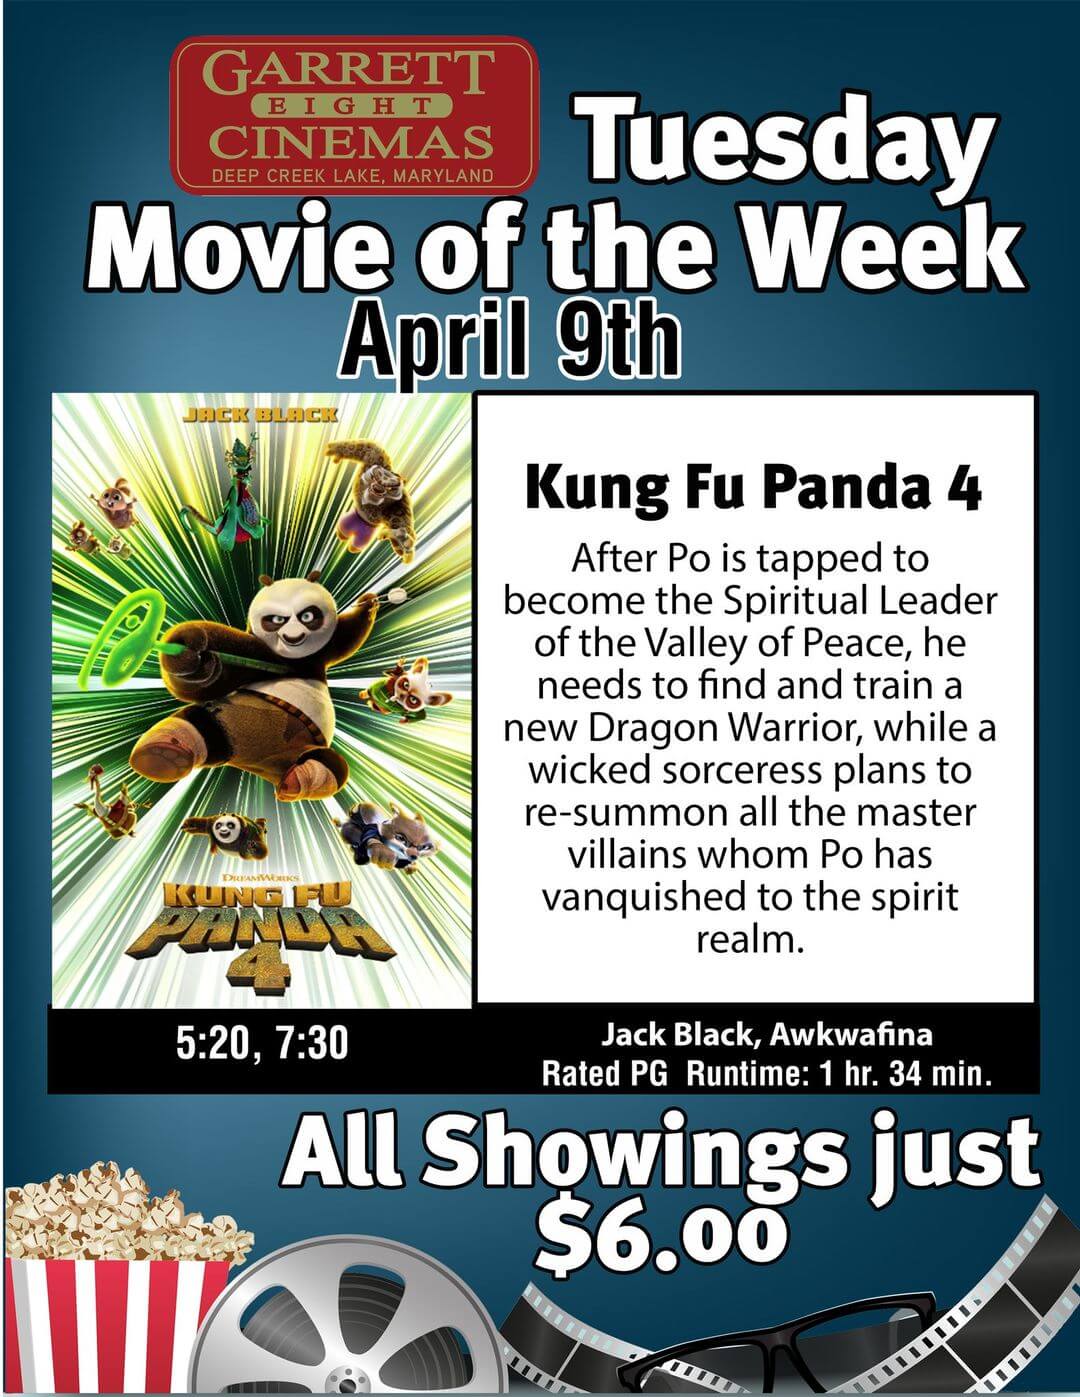 Garrett 8 Cinemas' Tuesday Movie of the Week: Kung Fu Panda 4 at Deep Creek Lake, MD